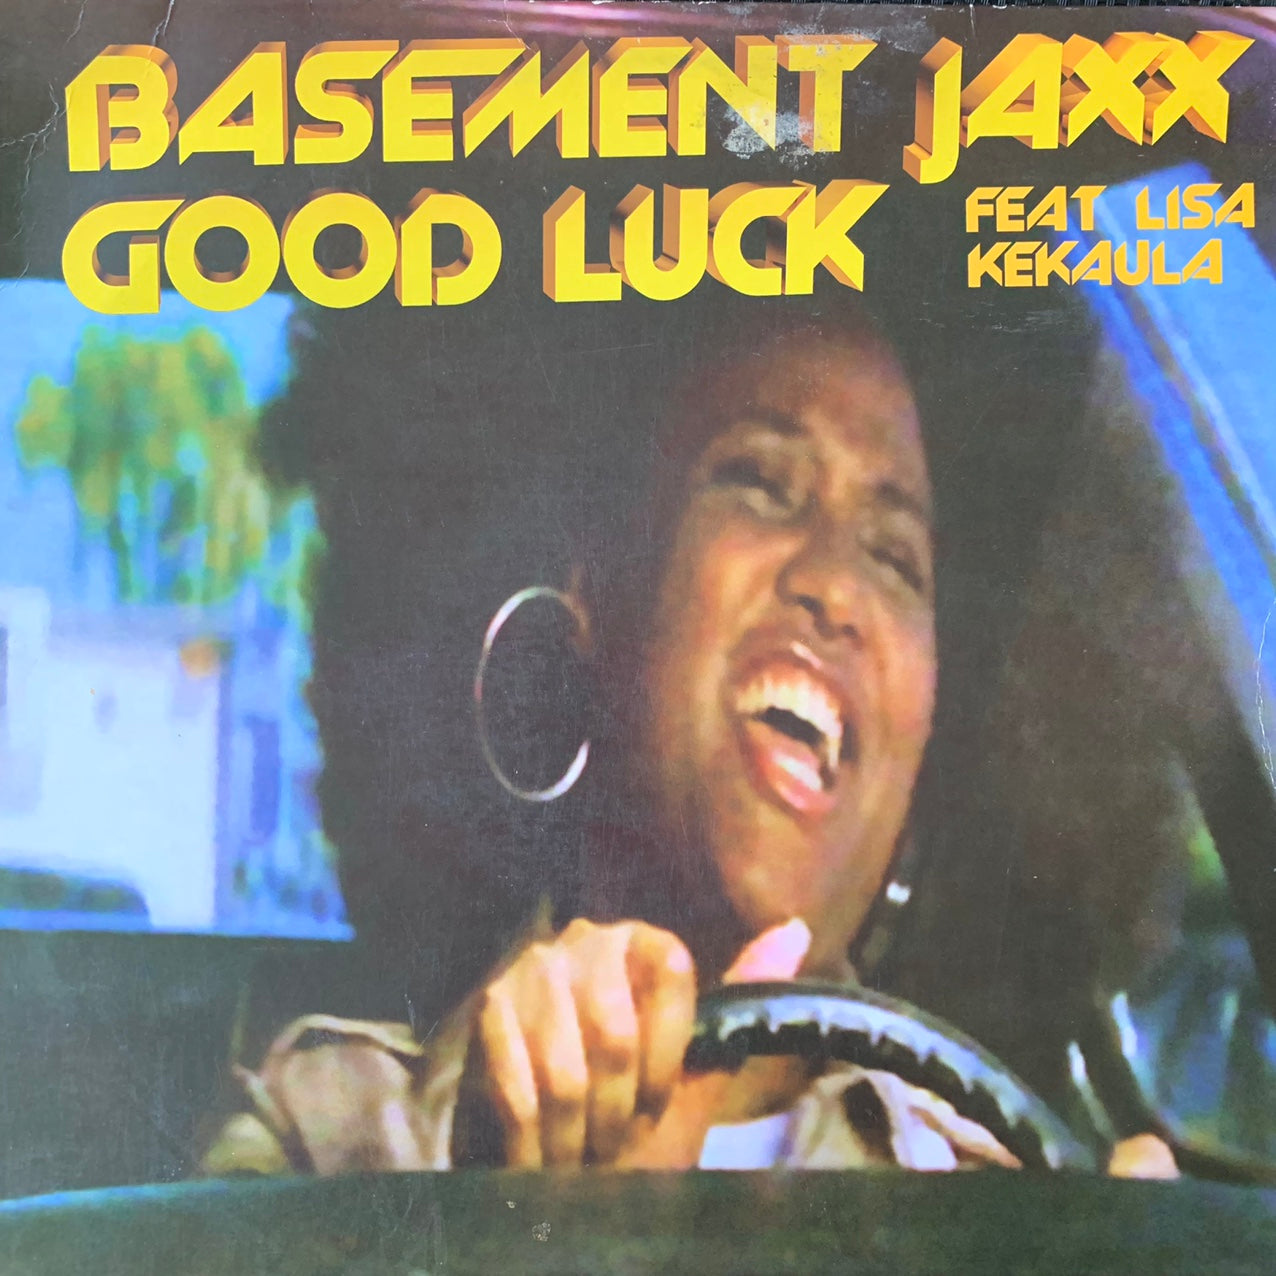 Basement Jaxx Feat Lisa Kekaula “Good Luck” / “ah-Choo” / “Onyx” 3 Track 12inch Vinyl